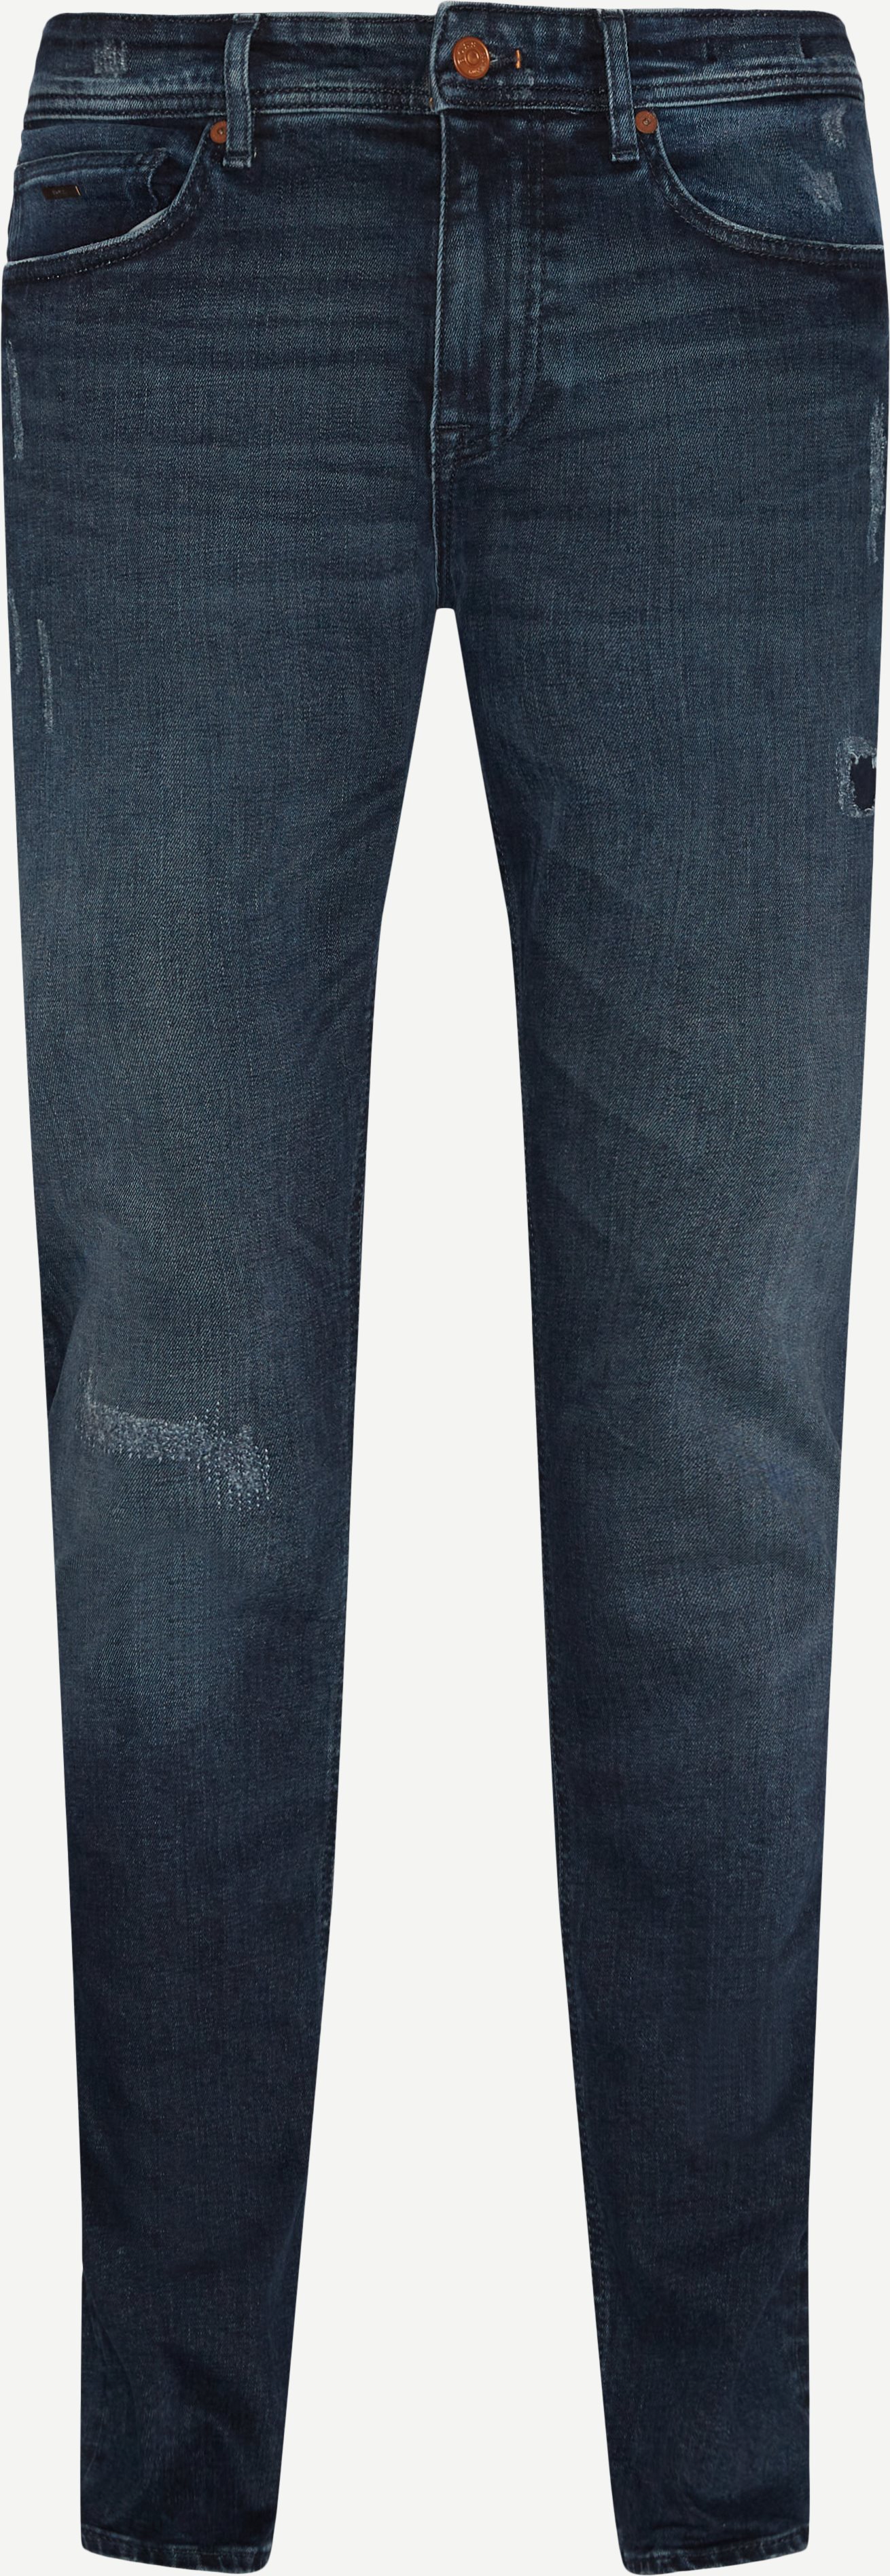 Delaware BC-LP Humble Jeans - Jeans - Slim fit - Denim